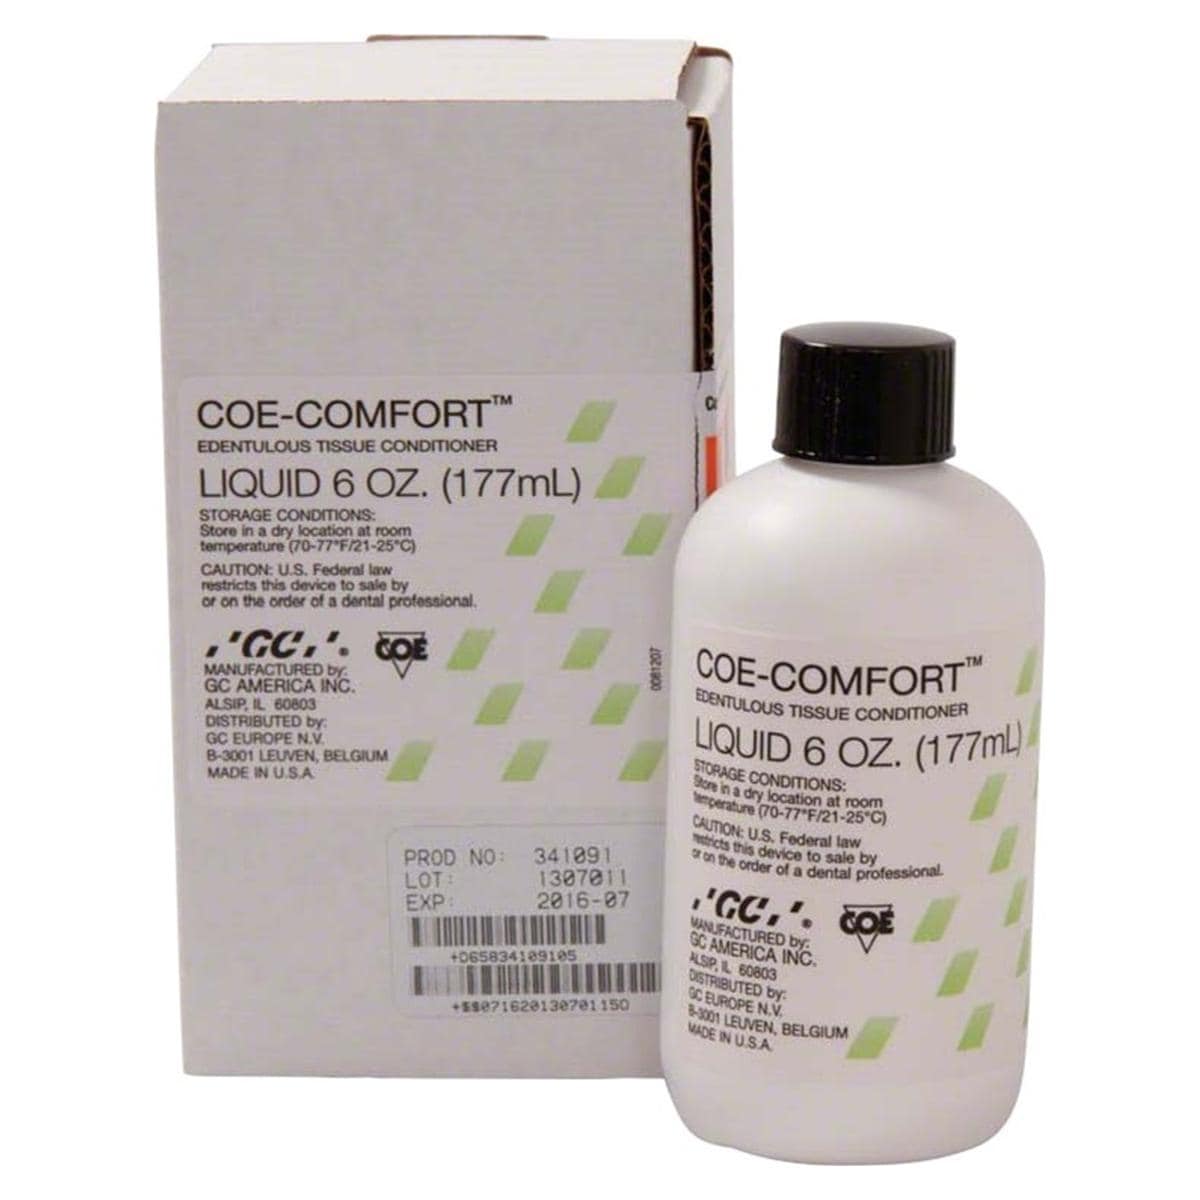 Coe Comfort liquide - Flacon, 177 ml